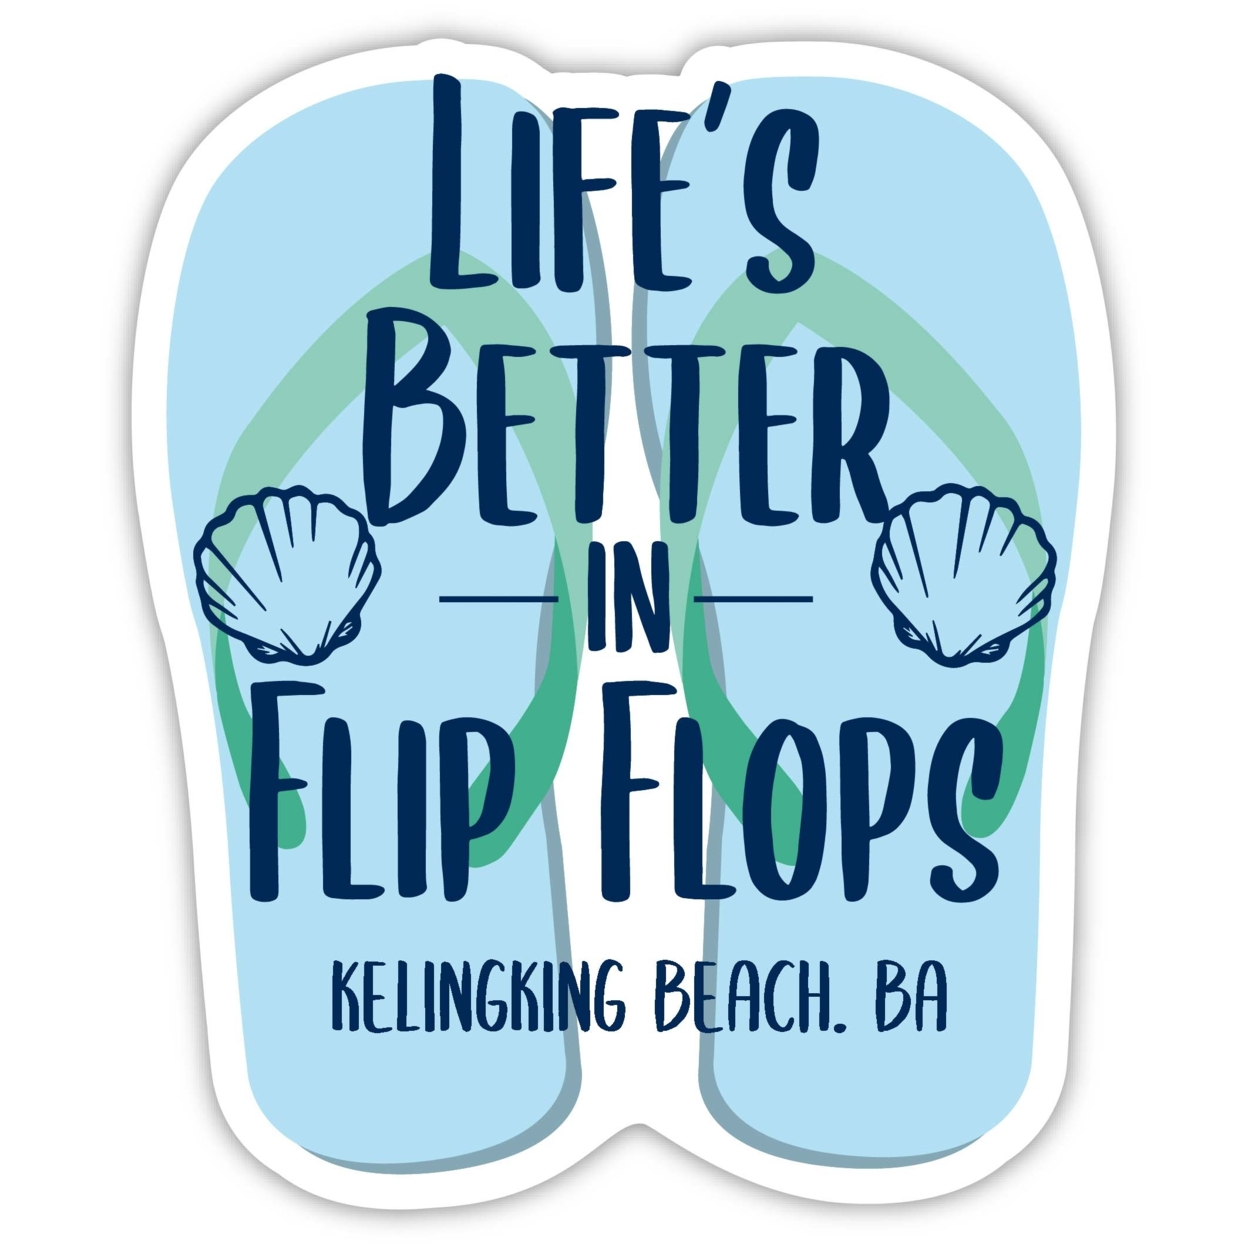 Kelingking Beach Bali Souvenir 4 Inch Vinyl Decal Sticker Flip Flop Design